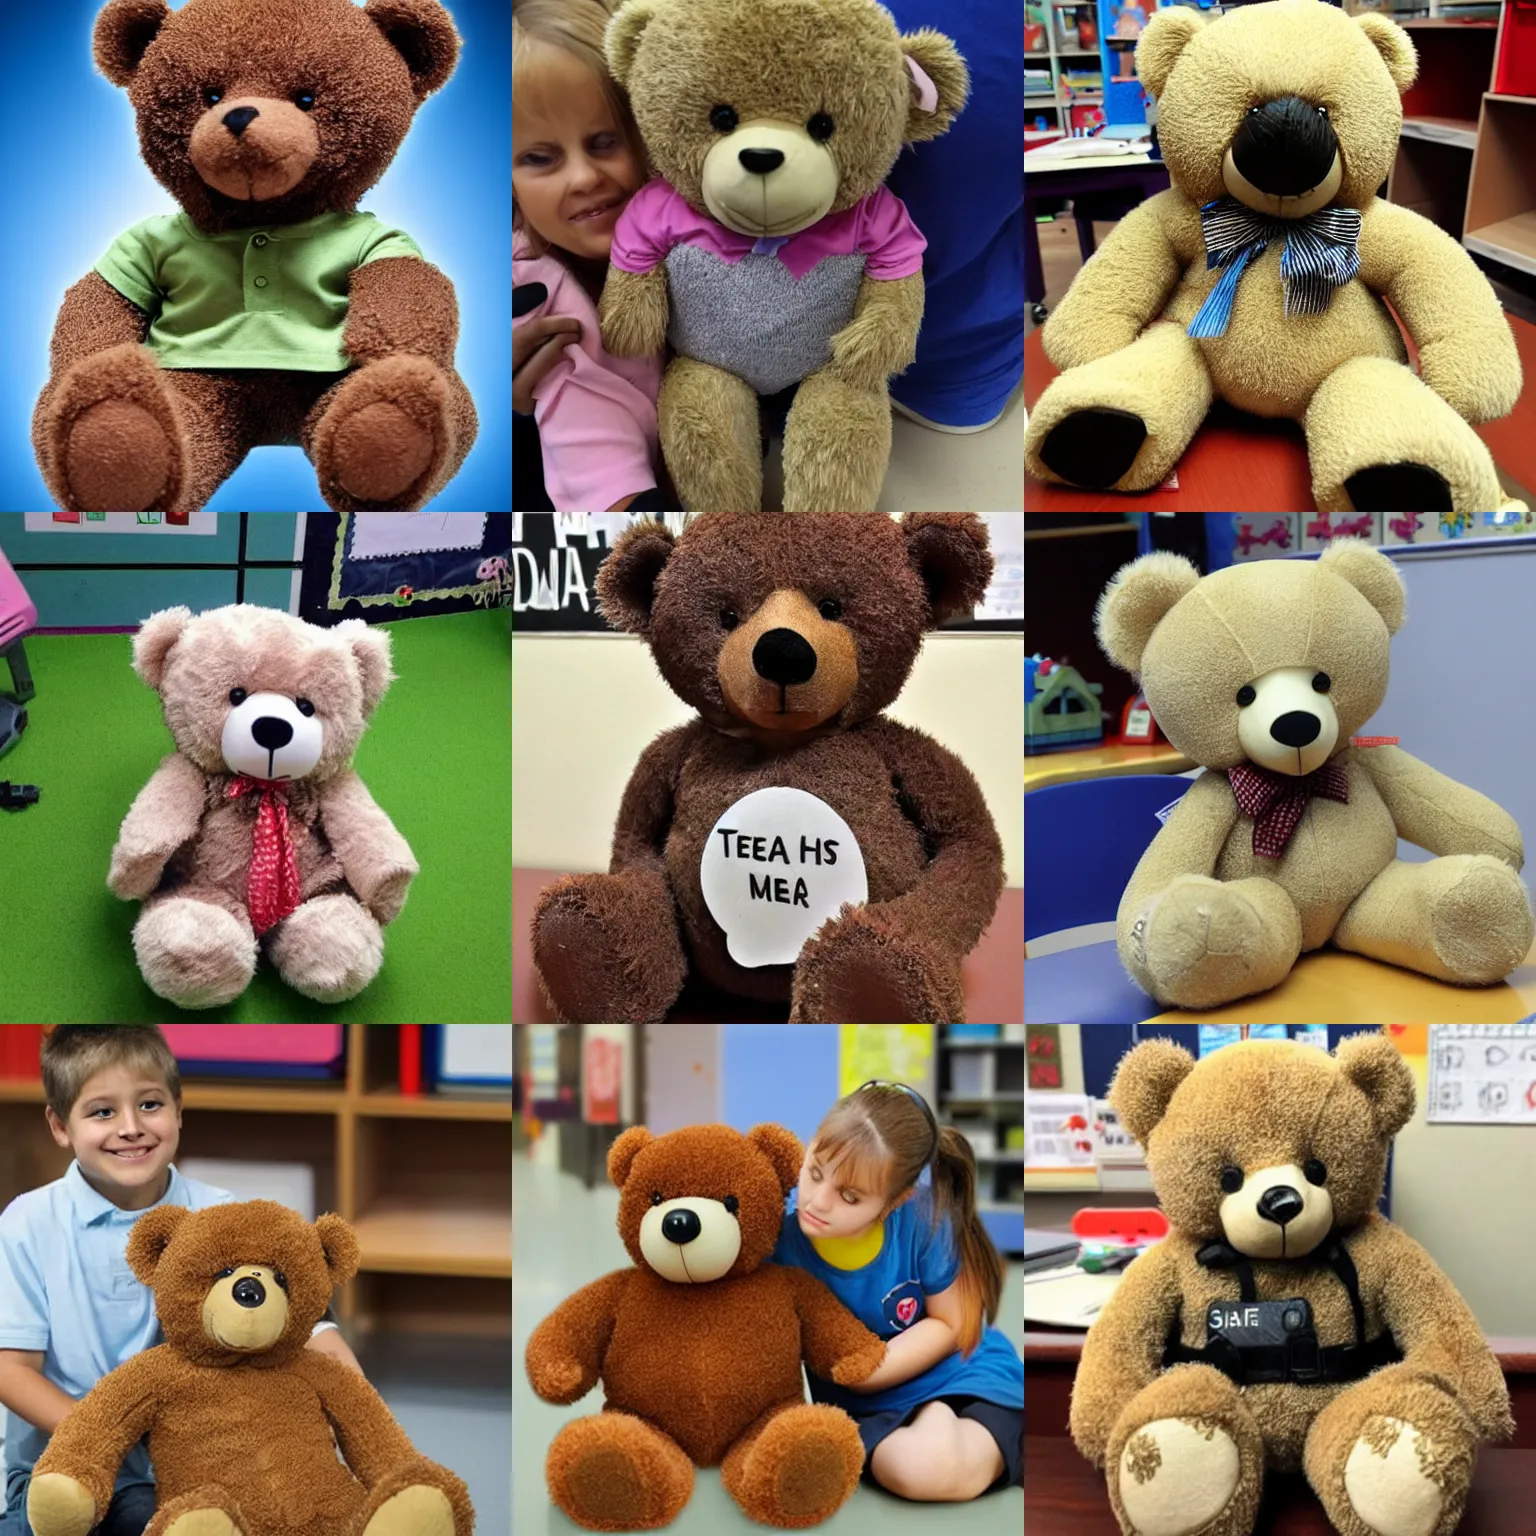 Prompt: a teddy bear that teachers safety